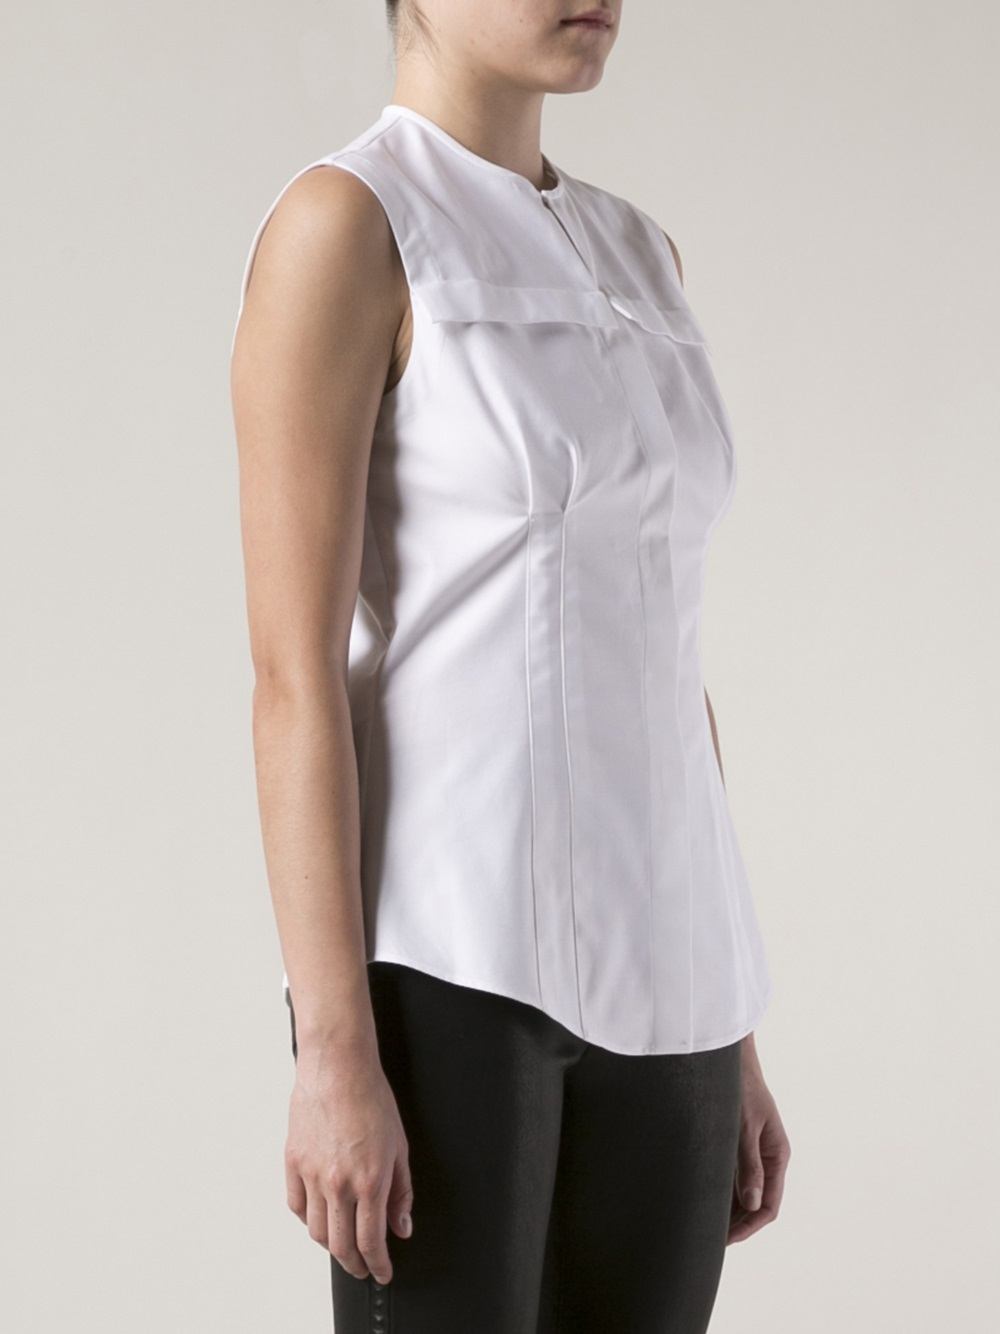 Alexander McQueen Sleeveless Shirt in White - Lyst